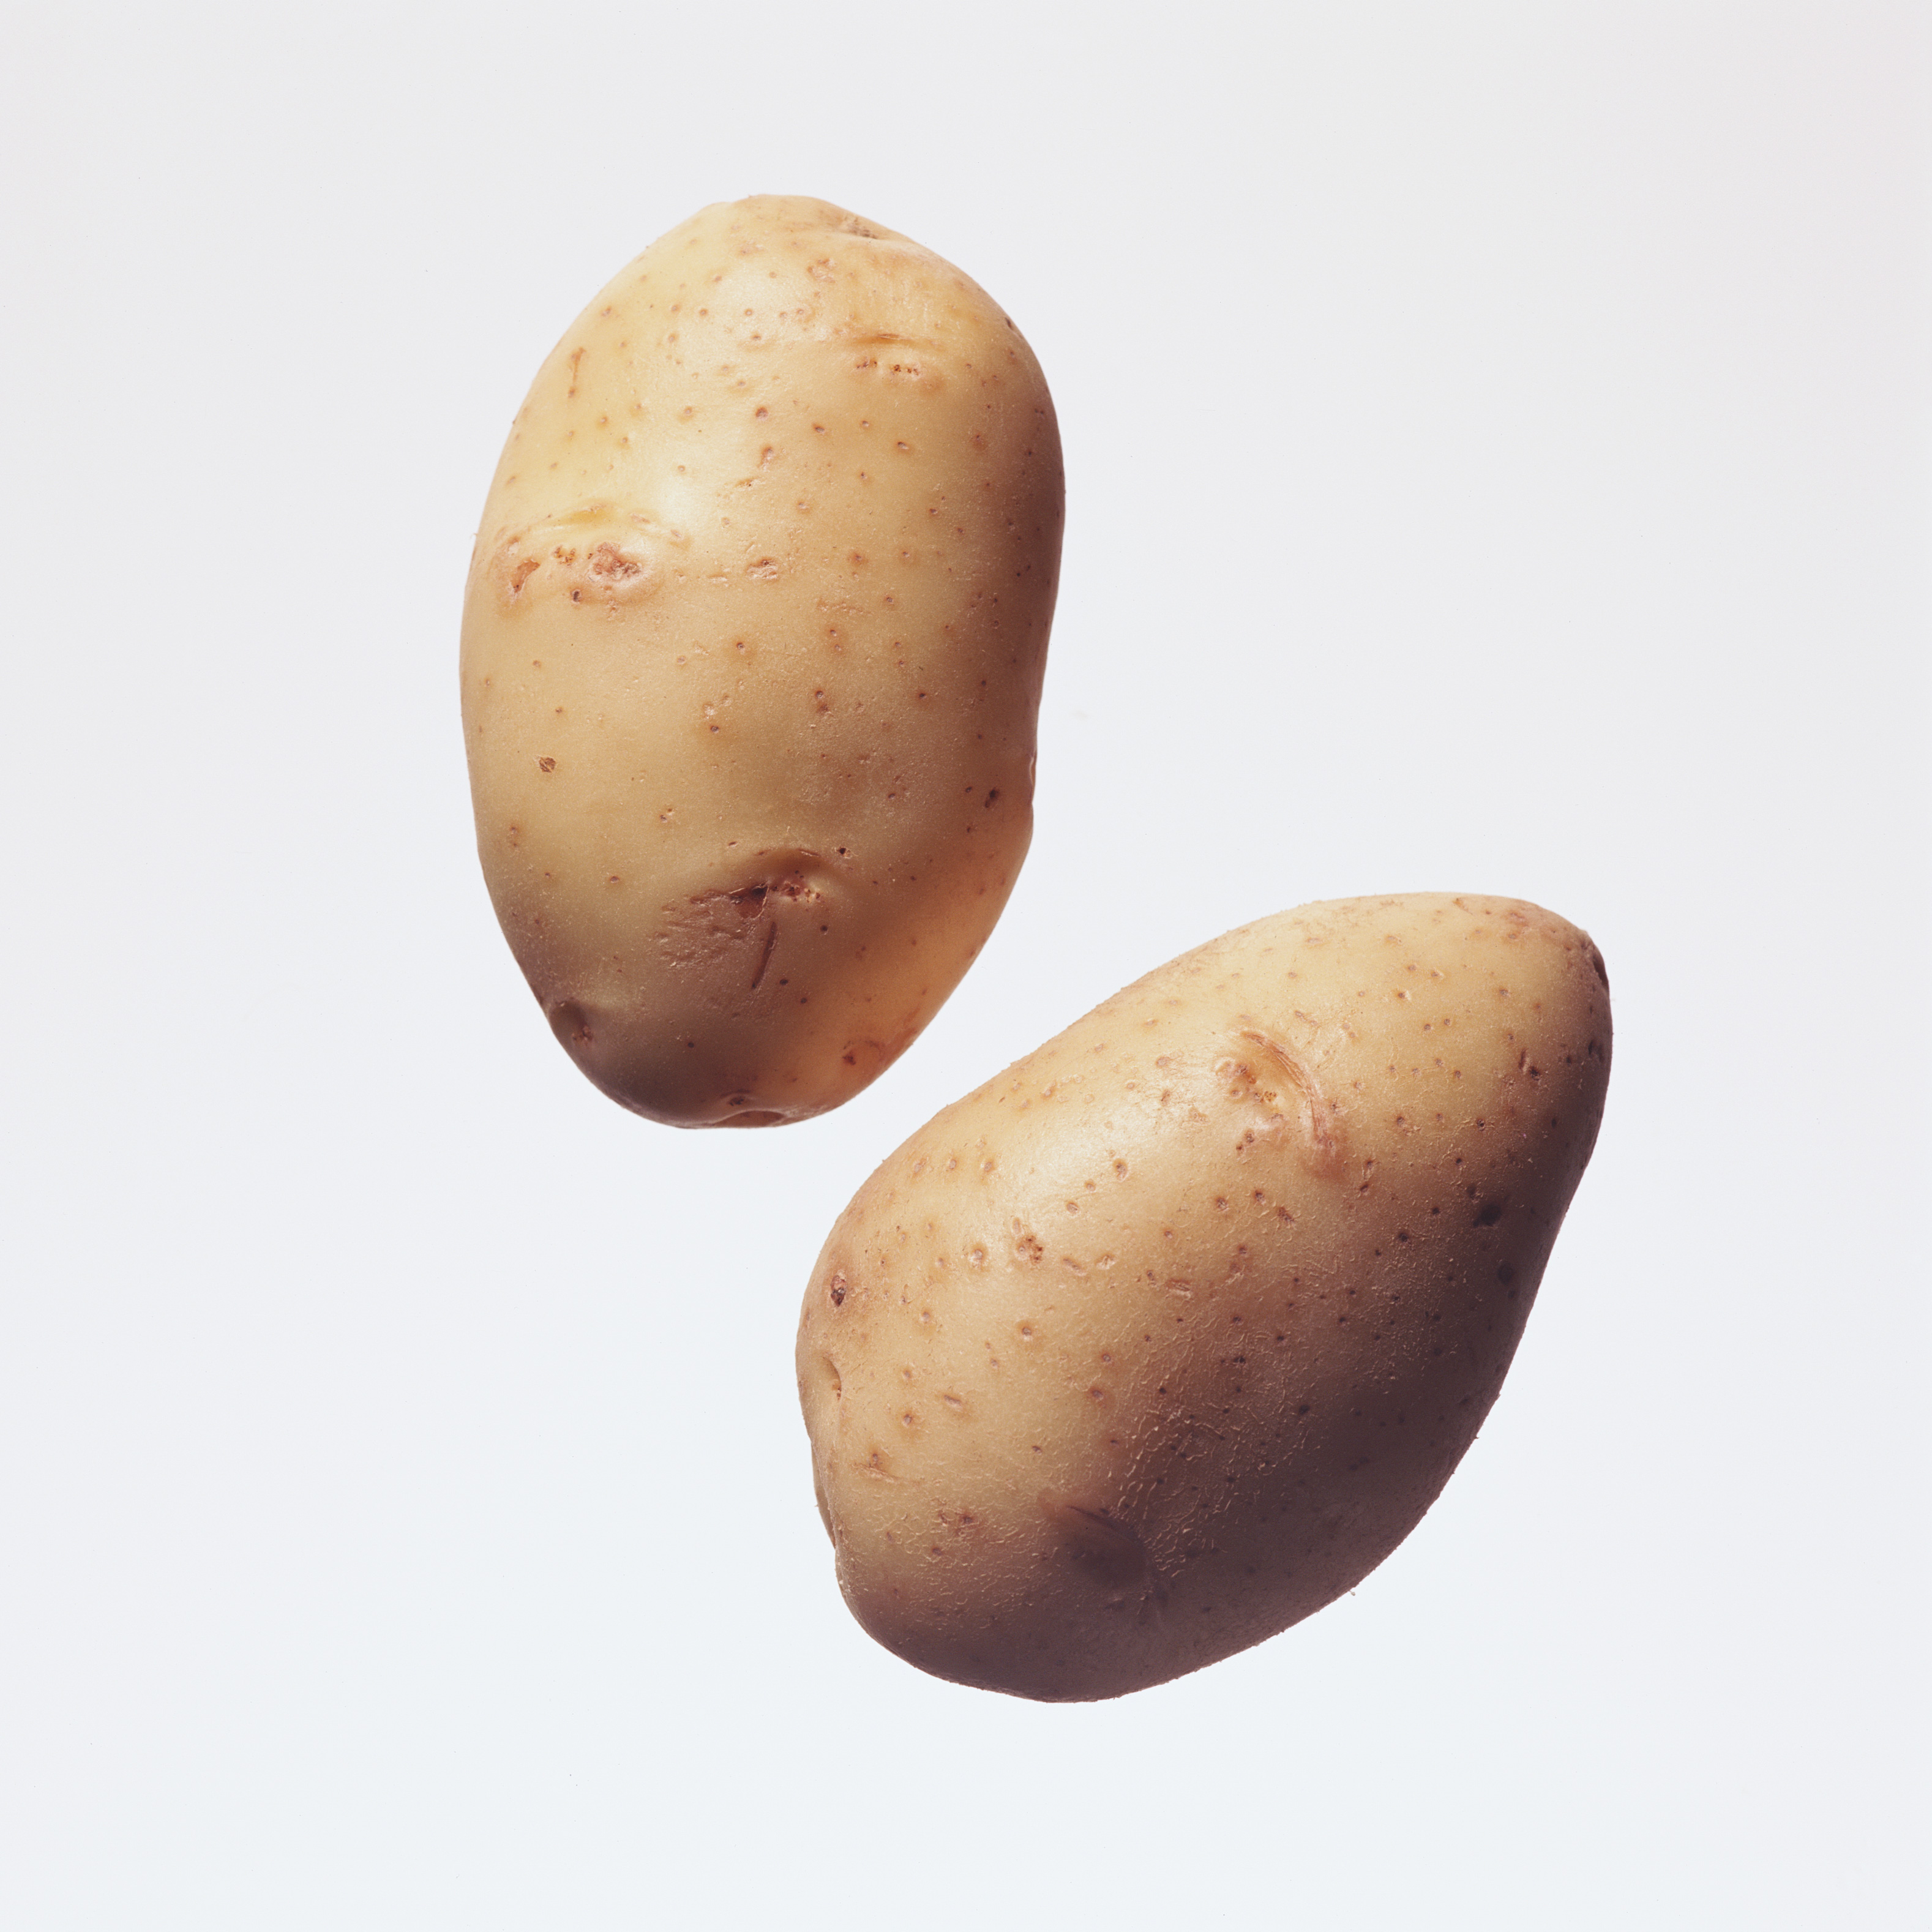 Potatoes picture. Картофель. Сырая картошка. Кариодель. Картошка картинка для детей.